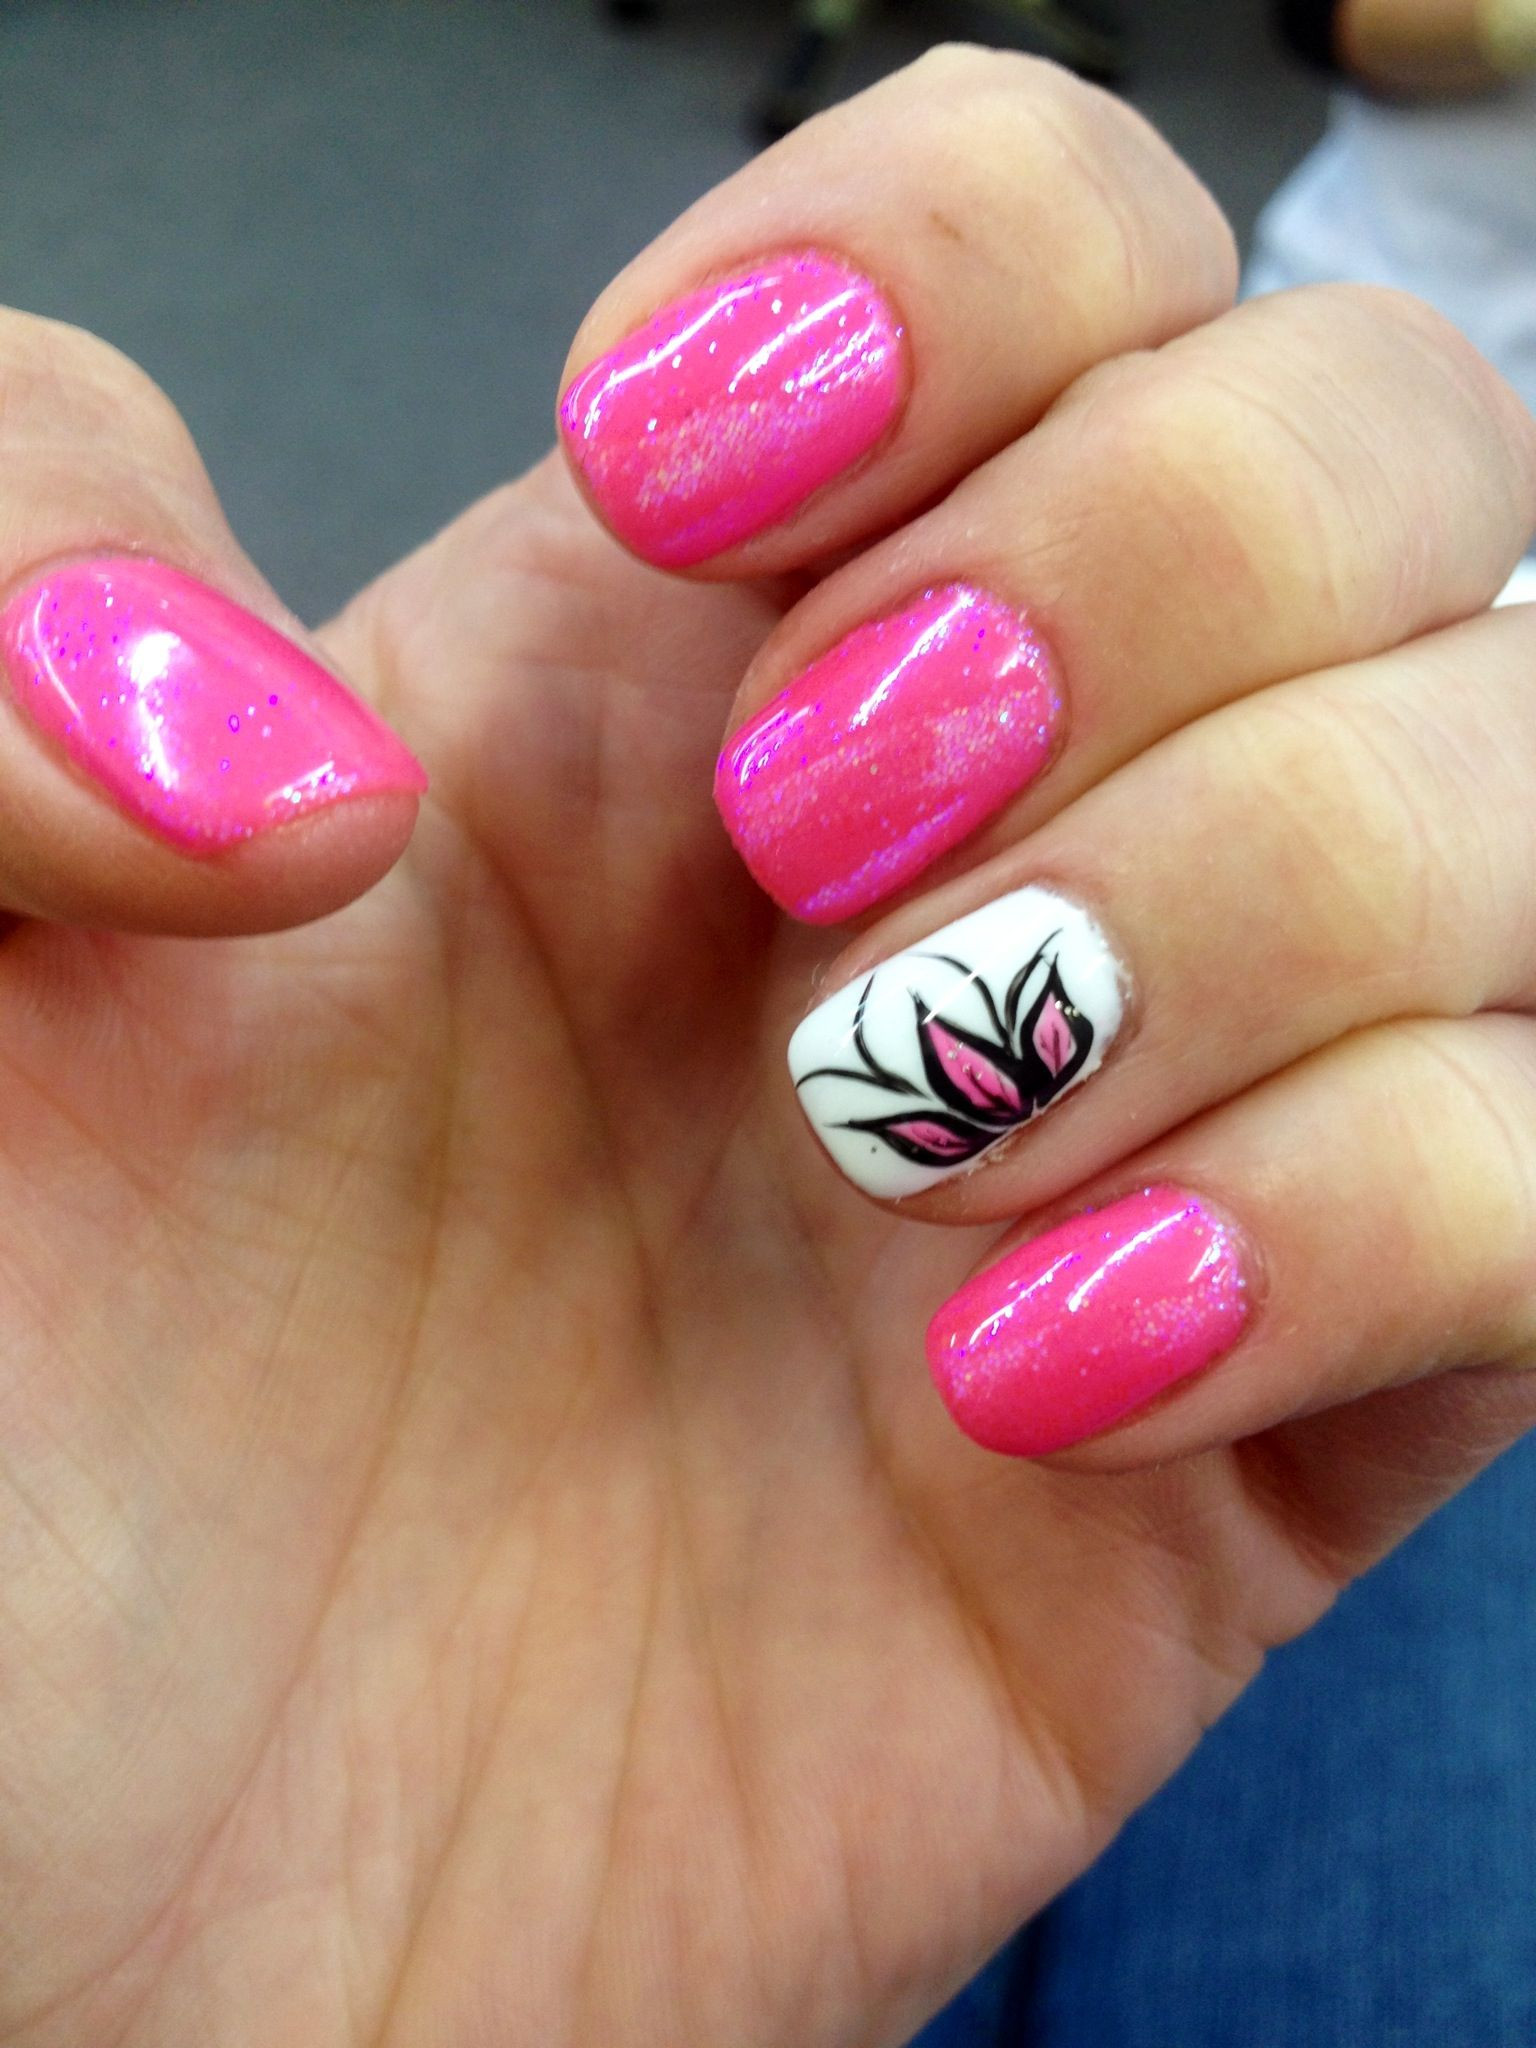 Pinterest Nail Designs
 Shellac nail design nail art nail ideas gellac pink